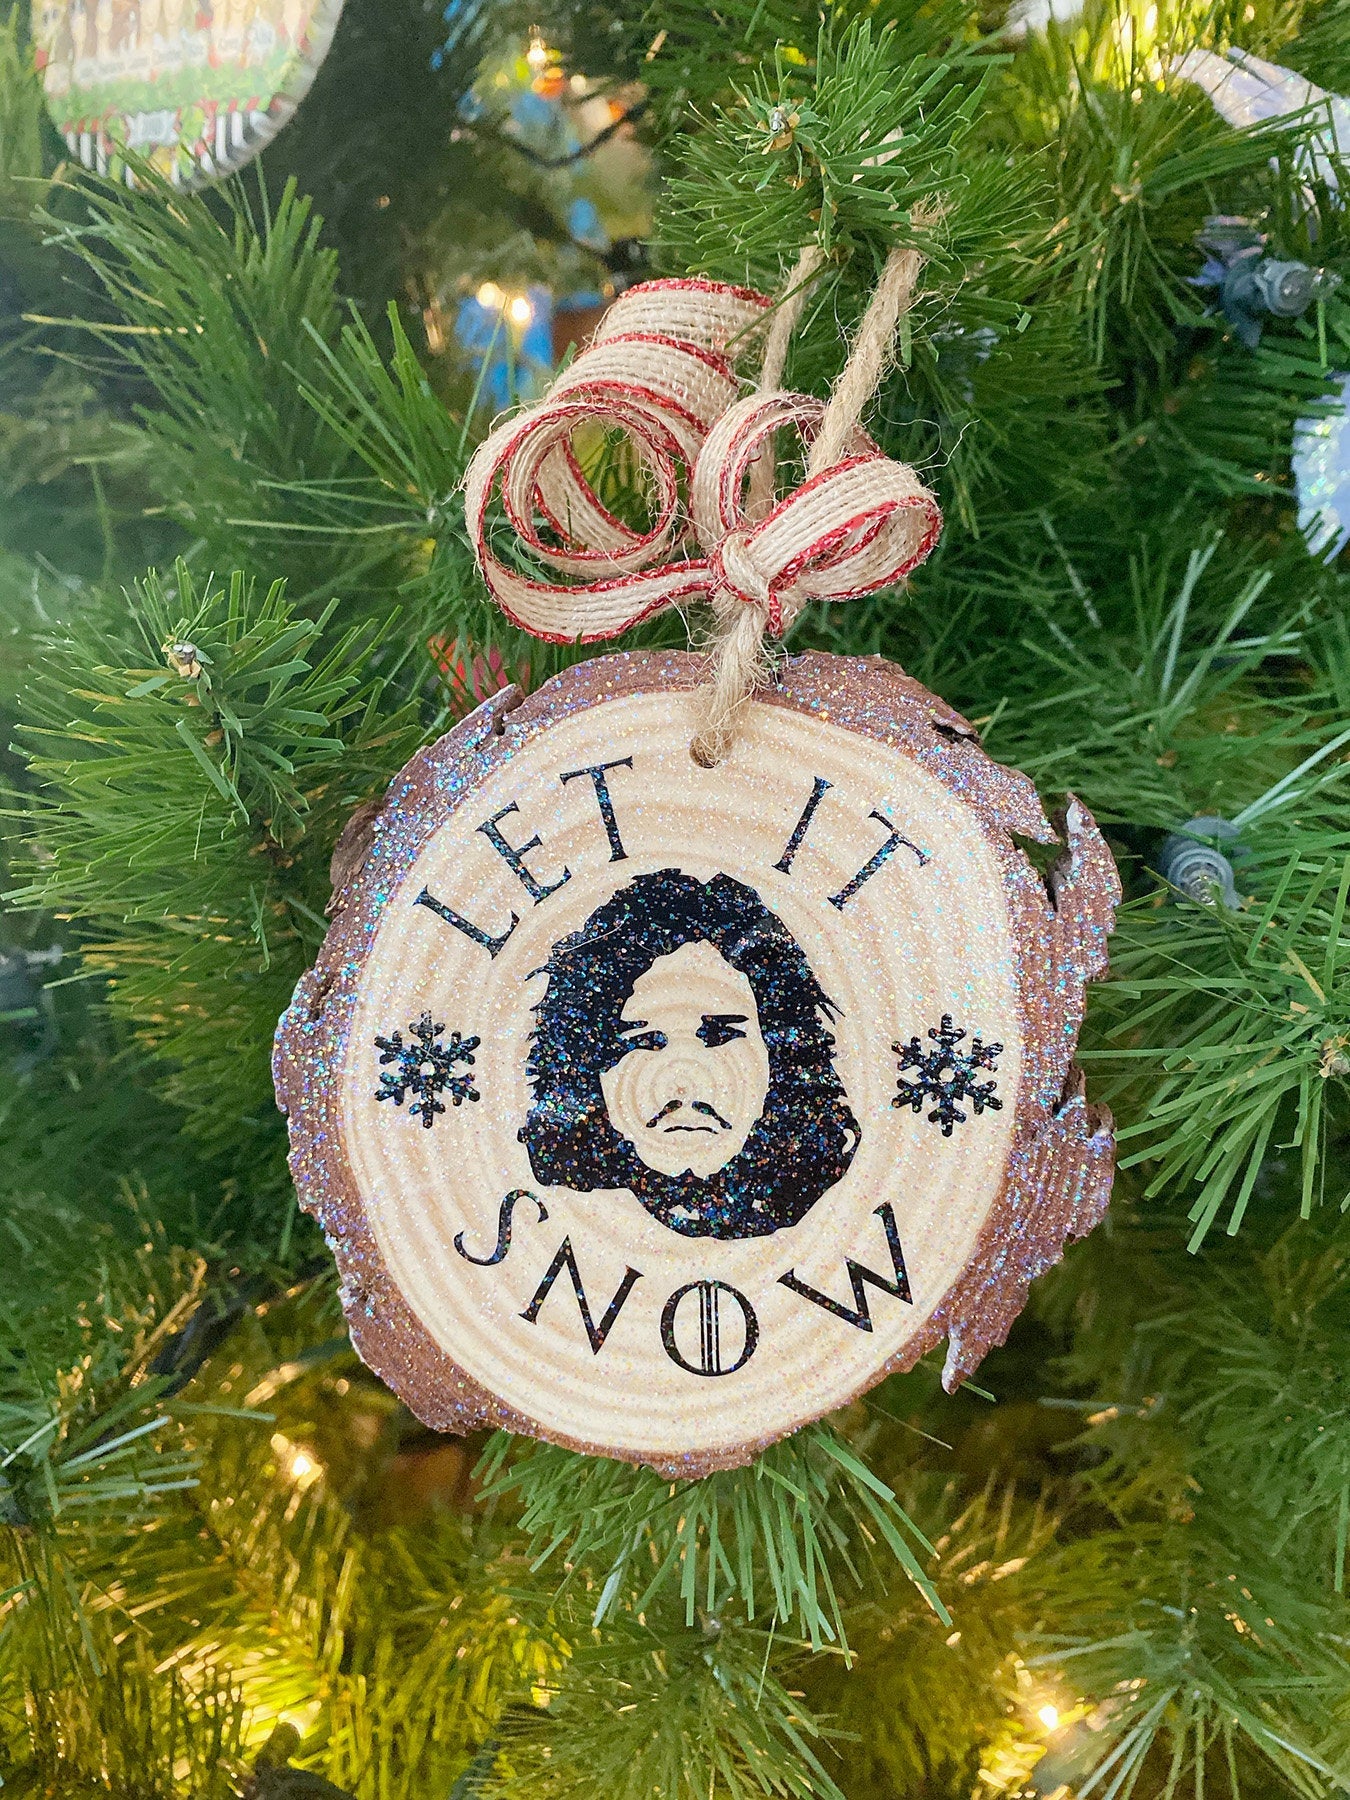 GOT, Stark, Jon Snow, Let It Snow, Christmas, Holiday ornament